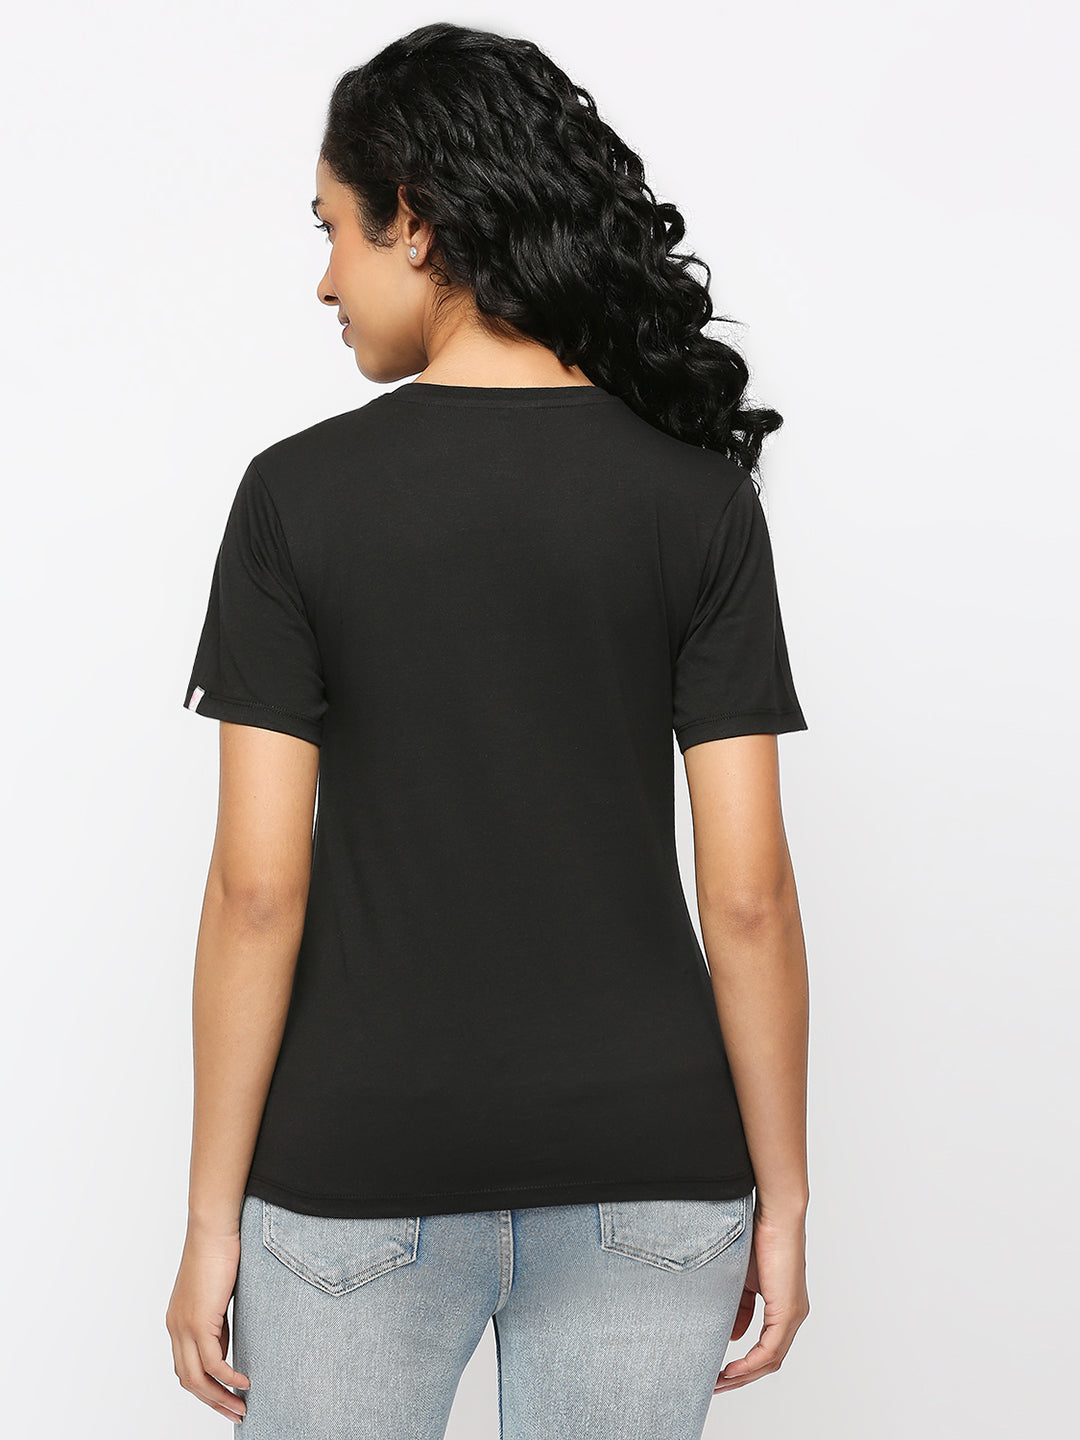 Solid Black Cotton Rich Essential T-Shirt for Women